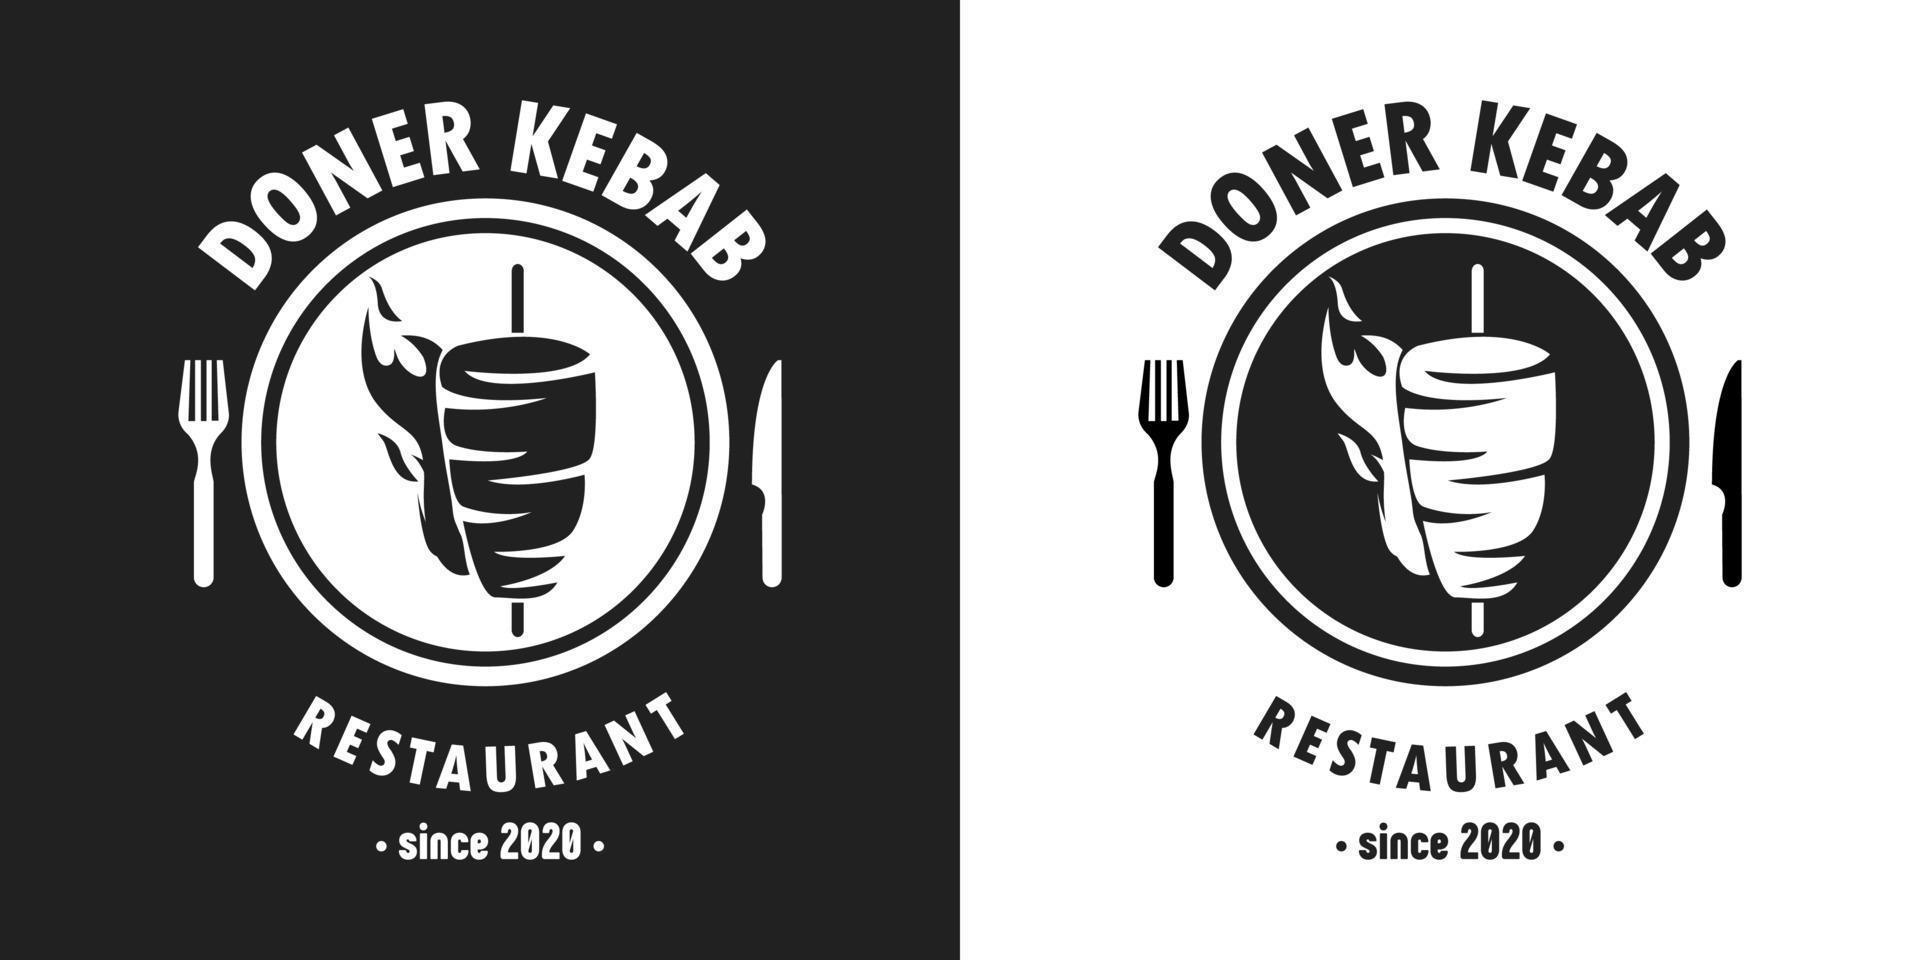 logo Döner Kebab per ristoranti e mercati. vettore